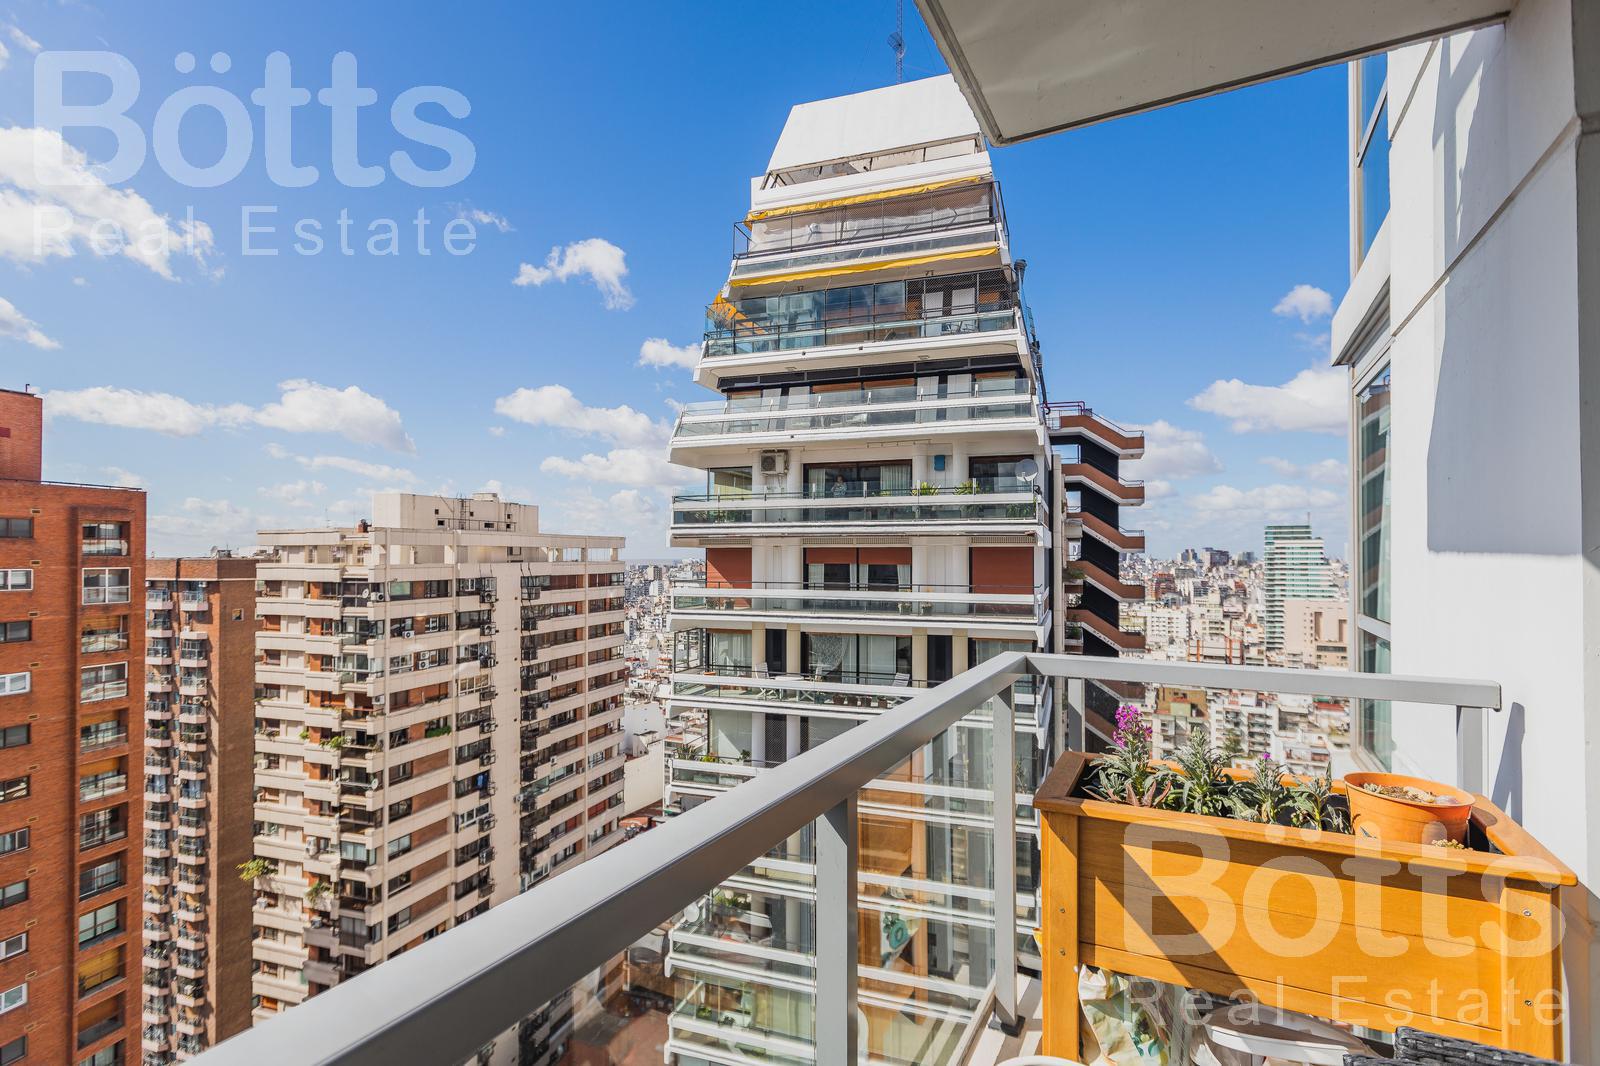 #5020616 | Rental | Apartment | Palermo (Bötts Real Estate)